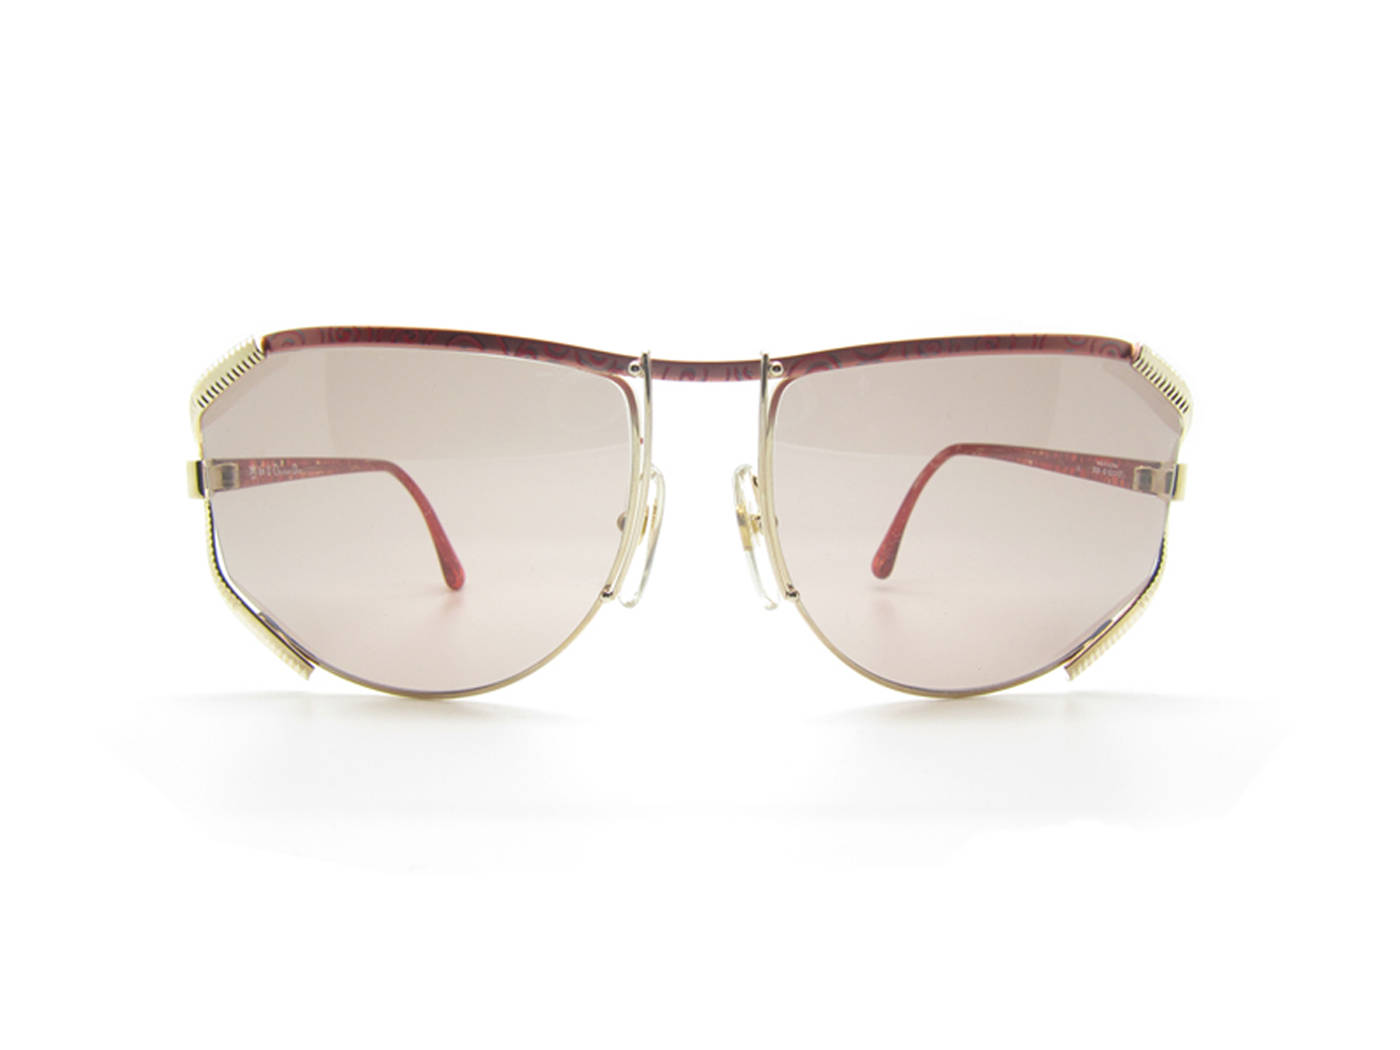 Christian Dior Sunglasses For Women Wallpaper